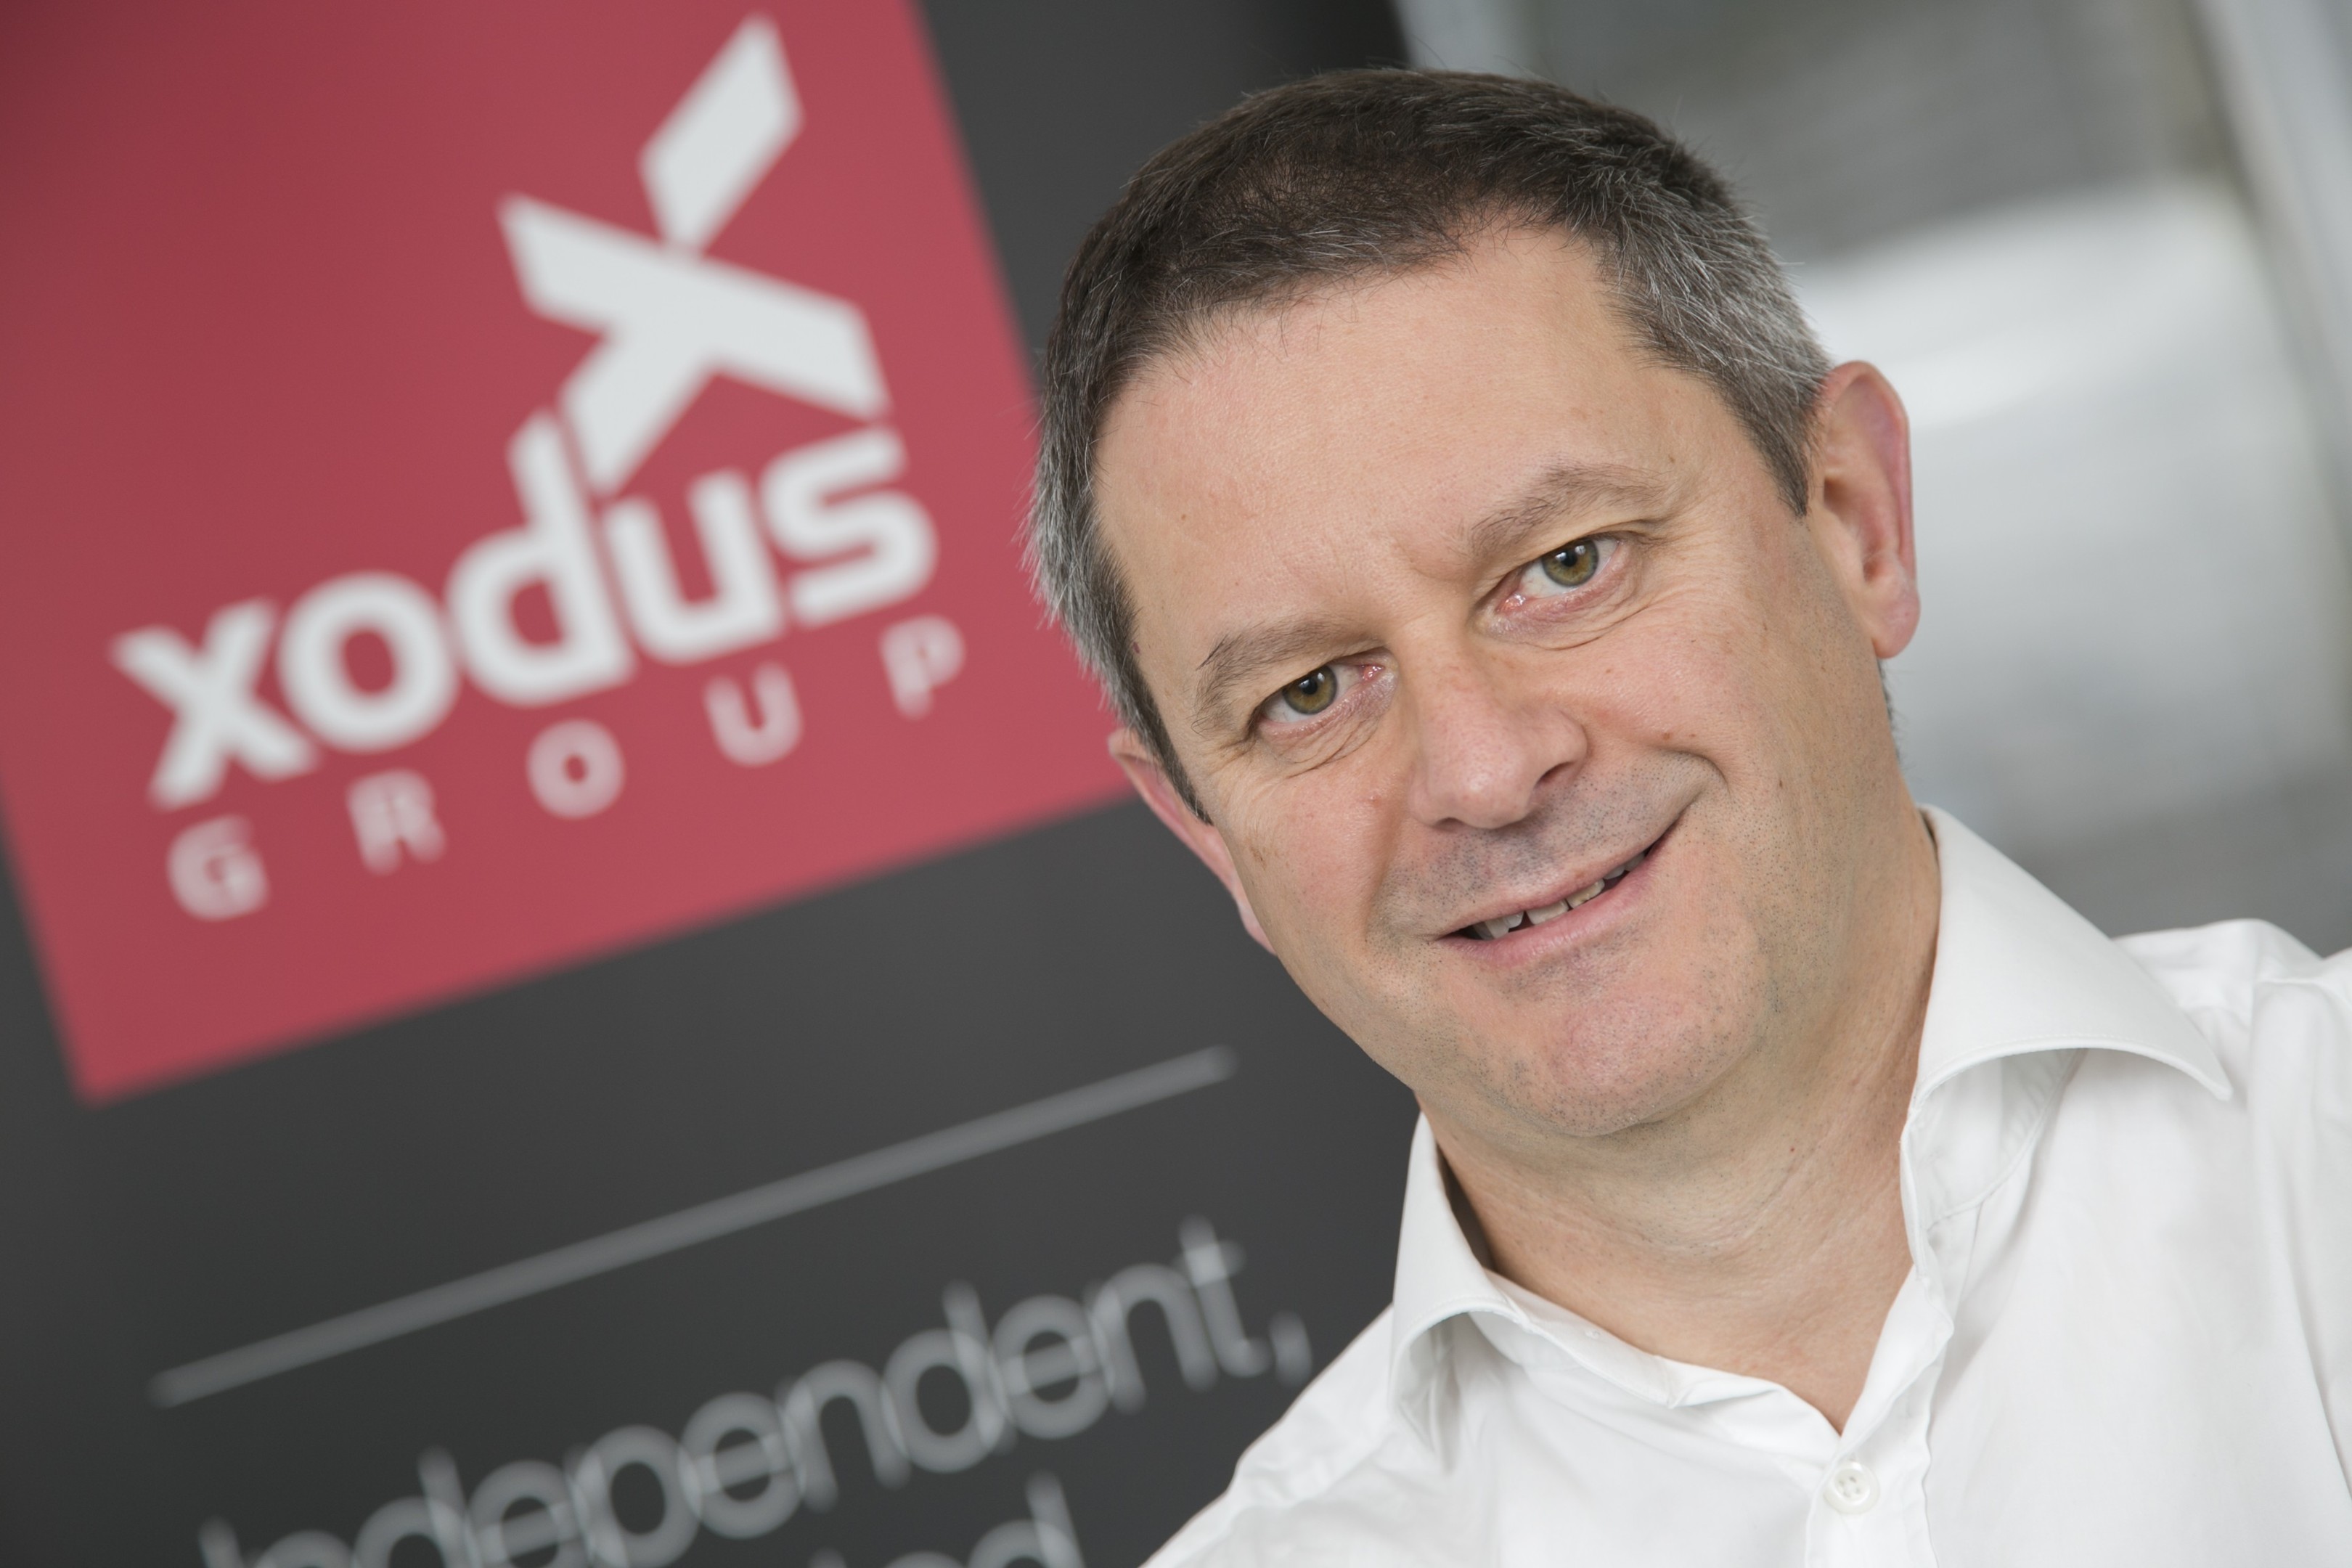 Xodus managing director Steve Swindell